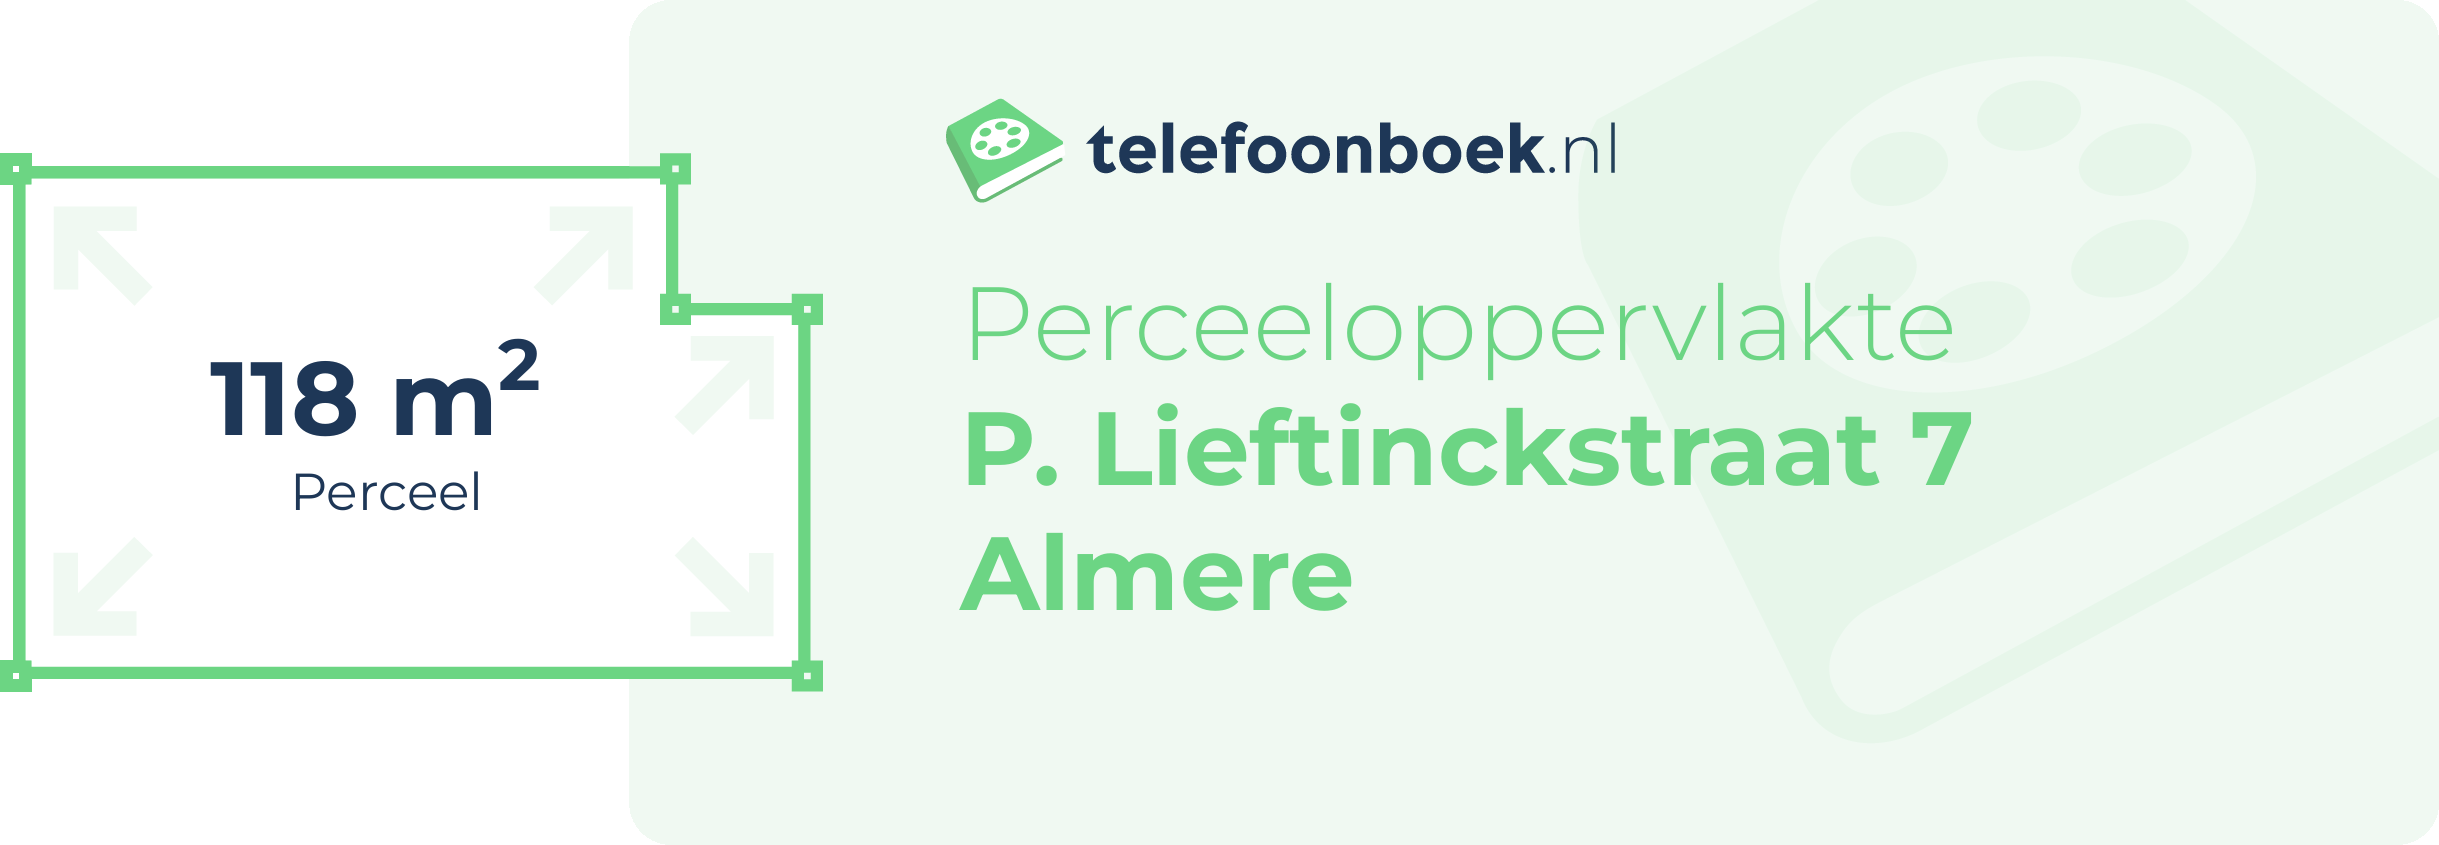 Perceeloppervlakte P. Lieftinckstraat 7 Almere